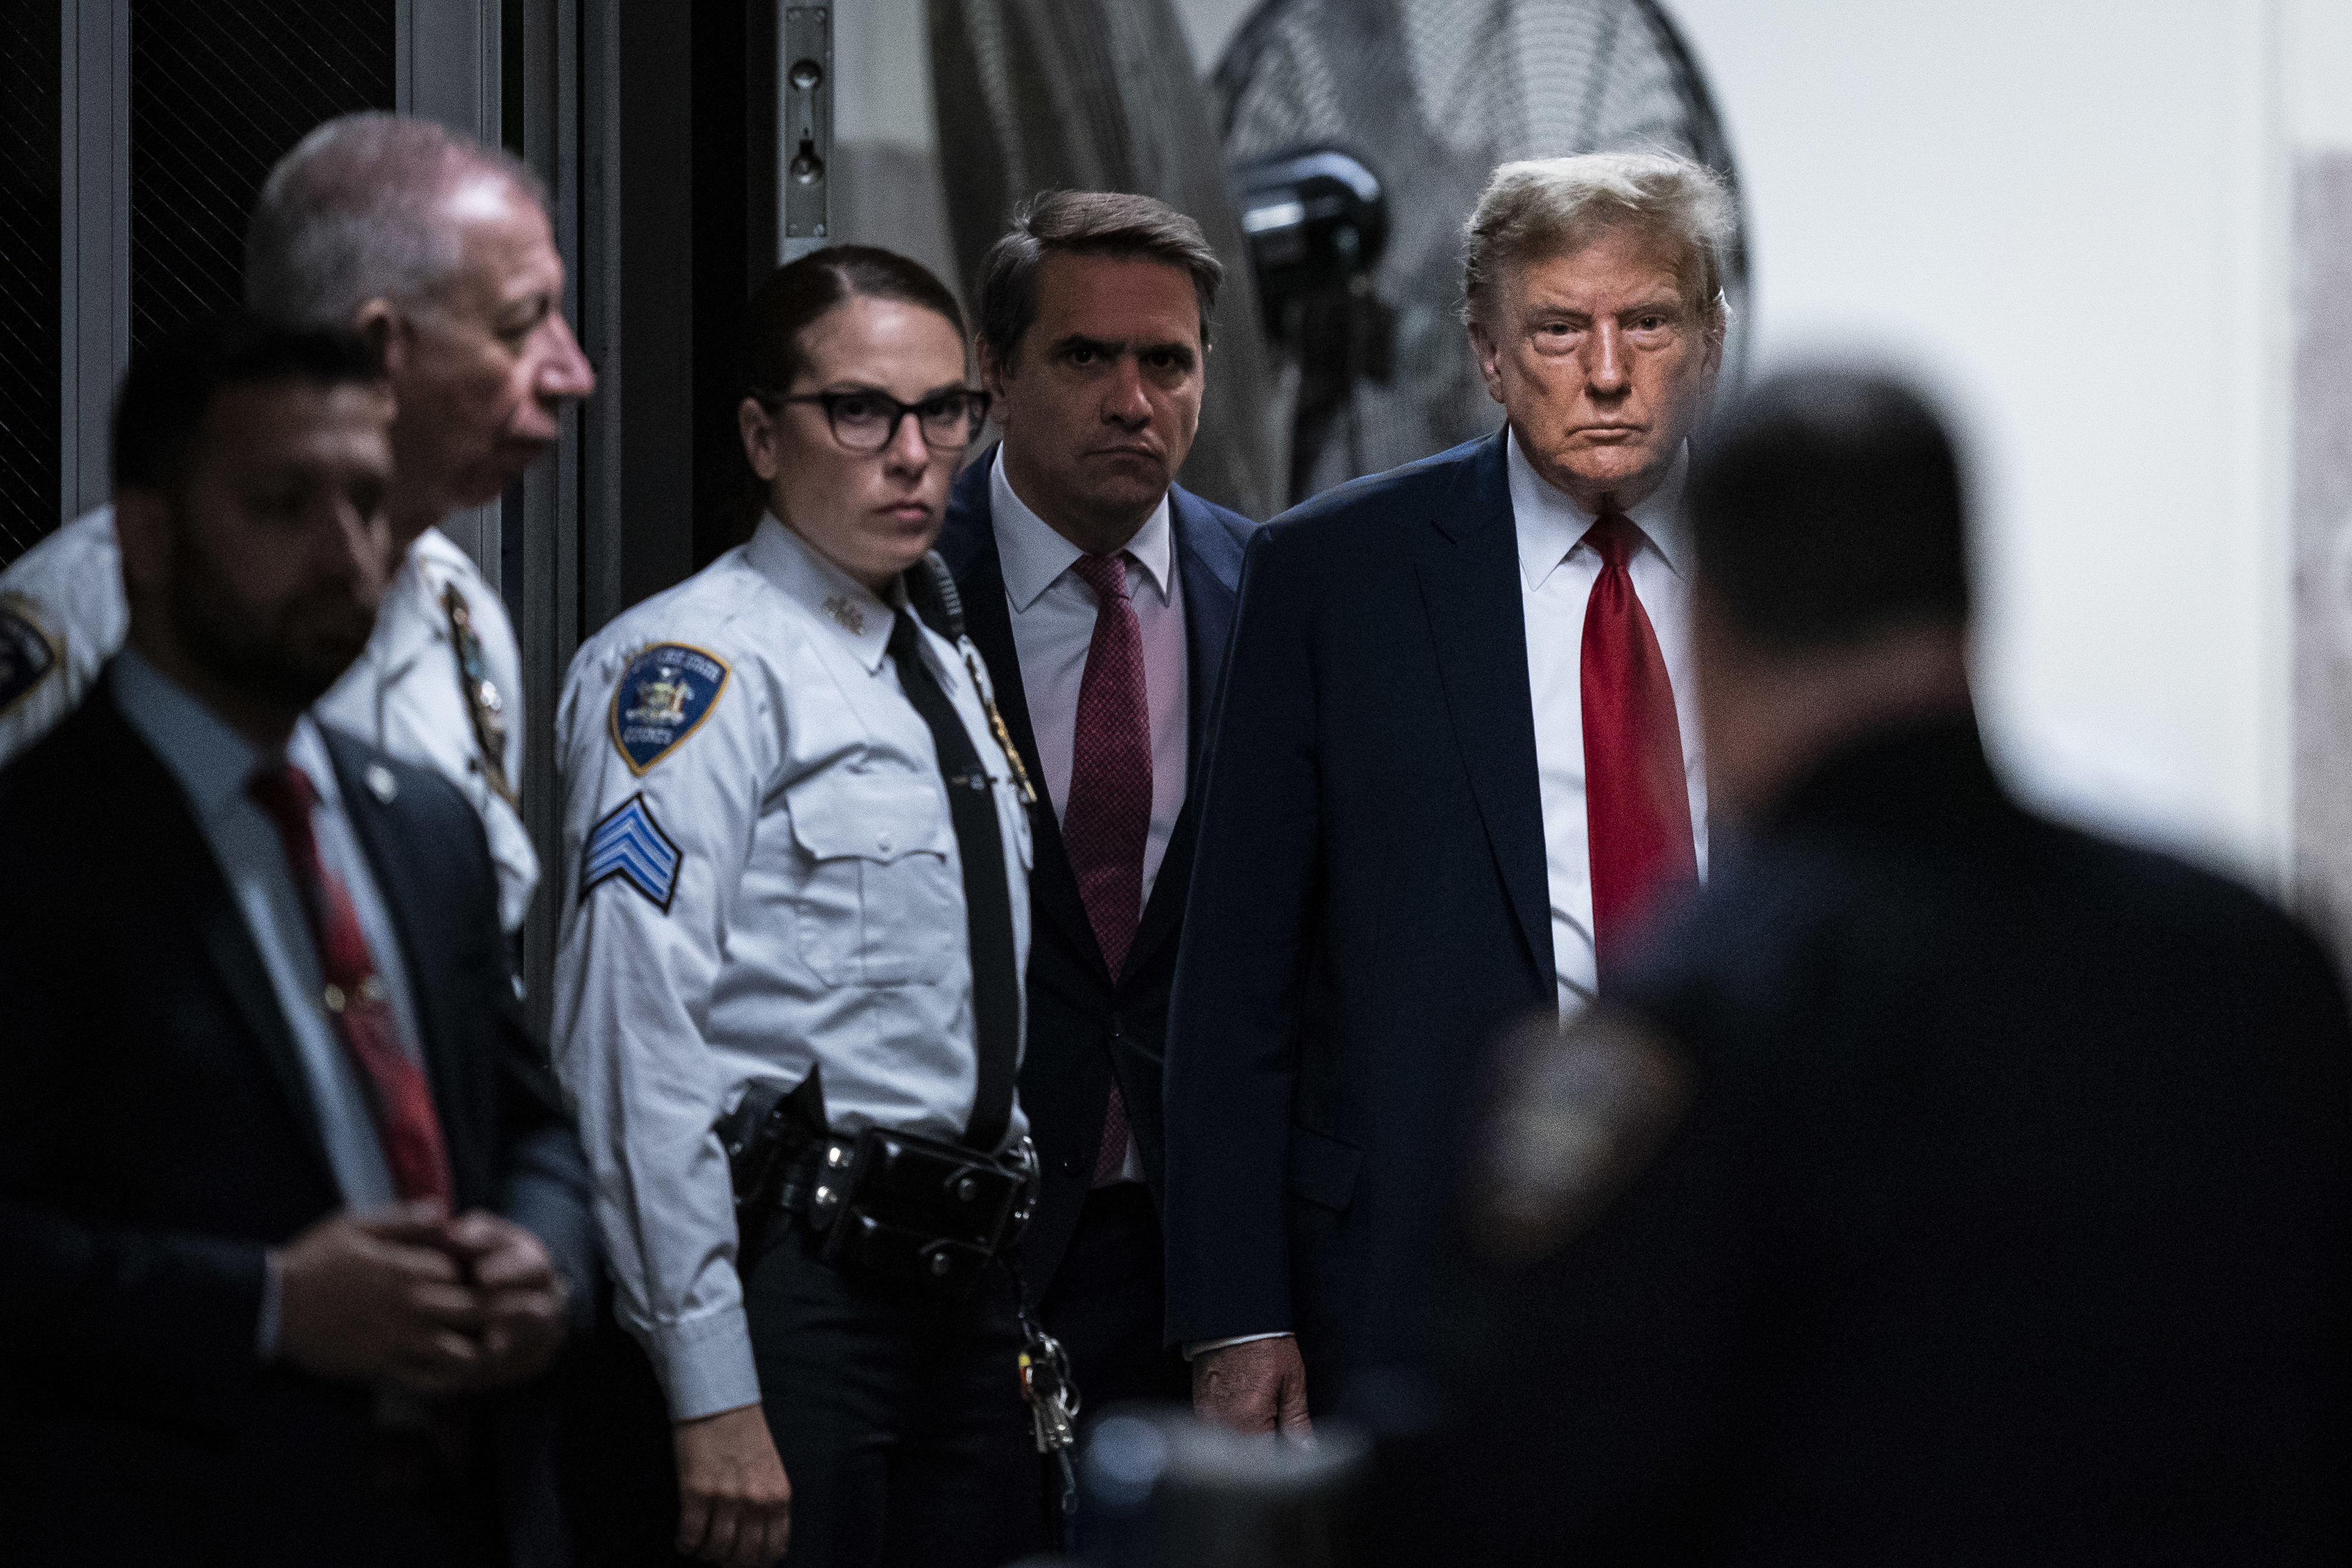 Trump walking with security behind him